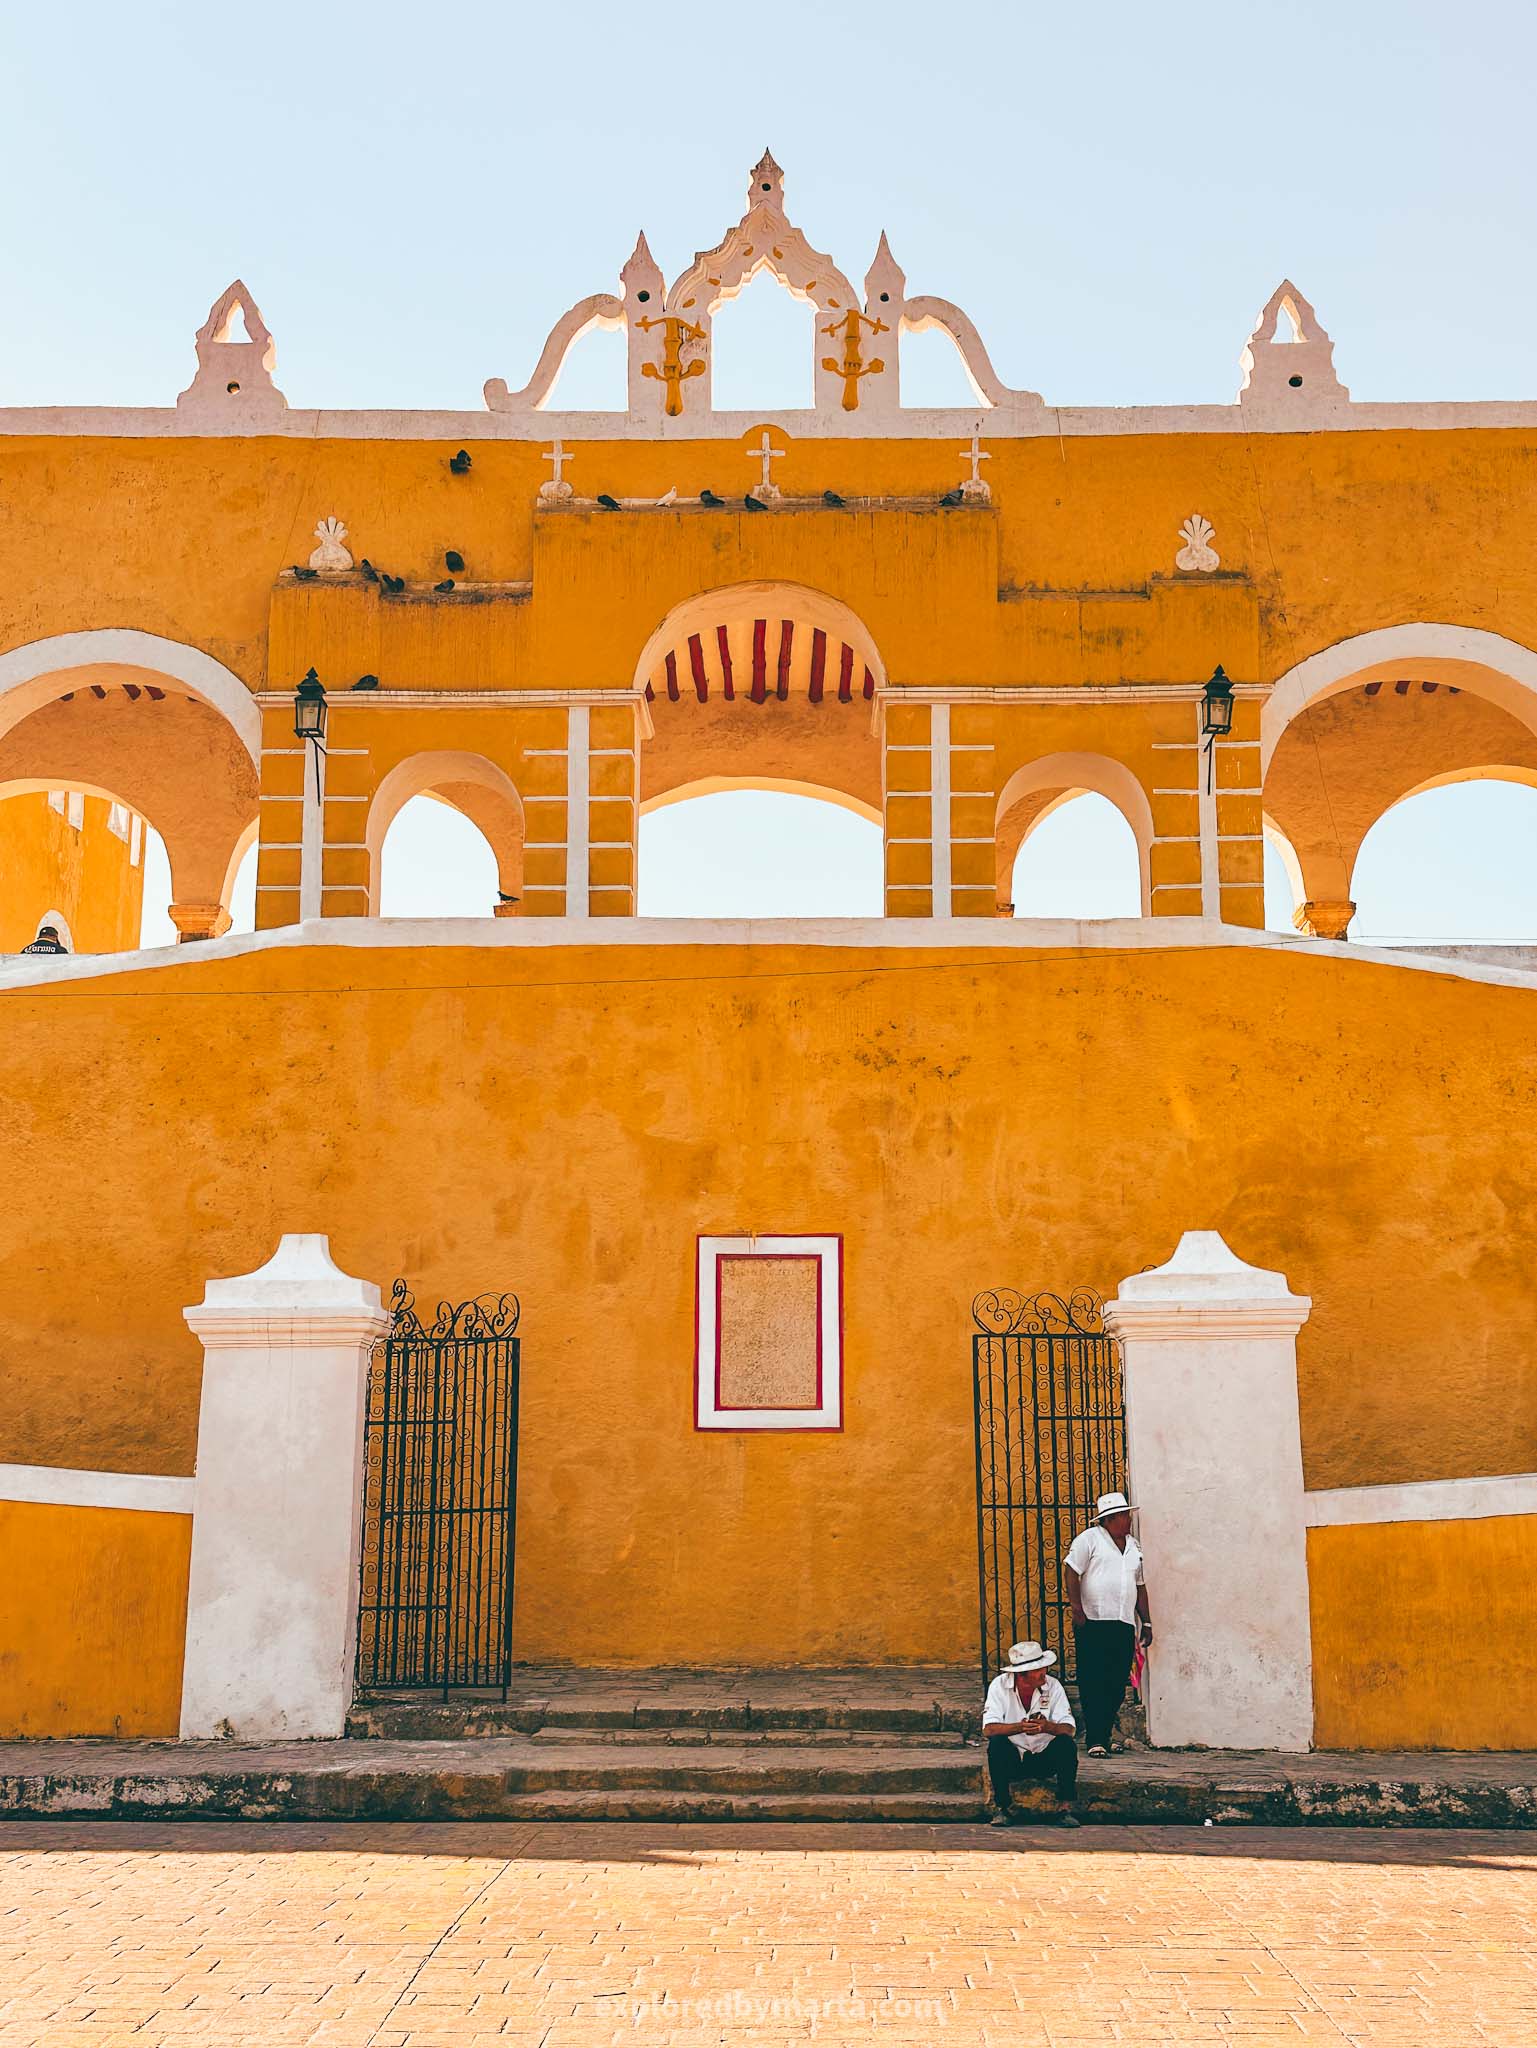 Izamal, Mexico-the yellow Convento de San Antonio convent in Izamal is the main attraction of the city